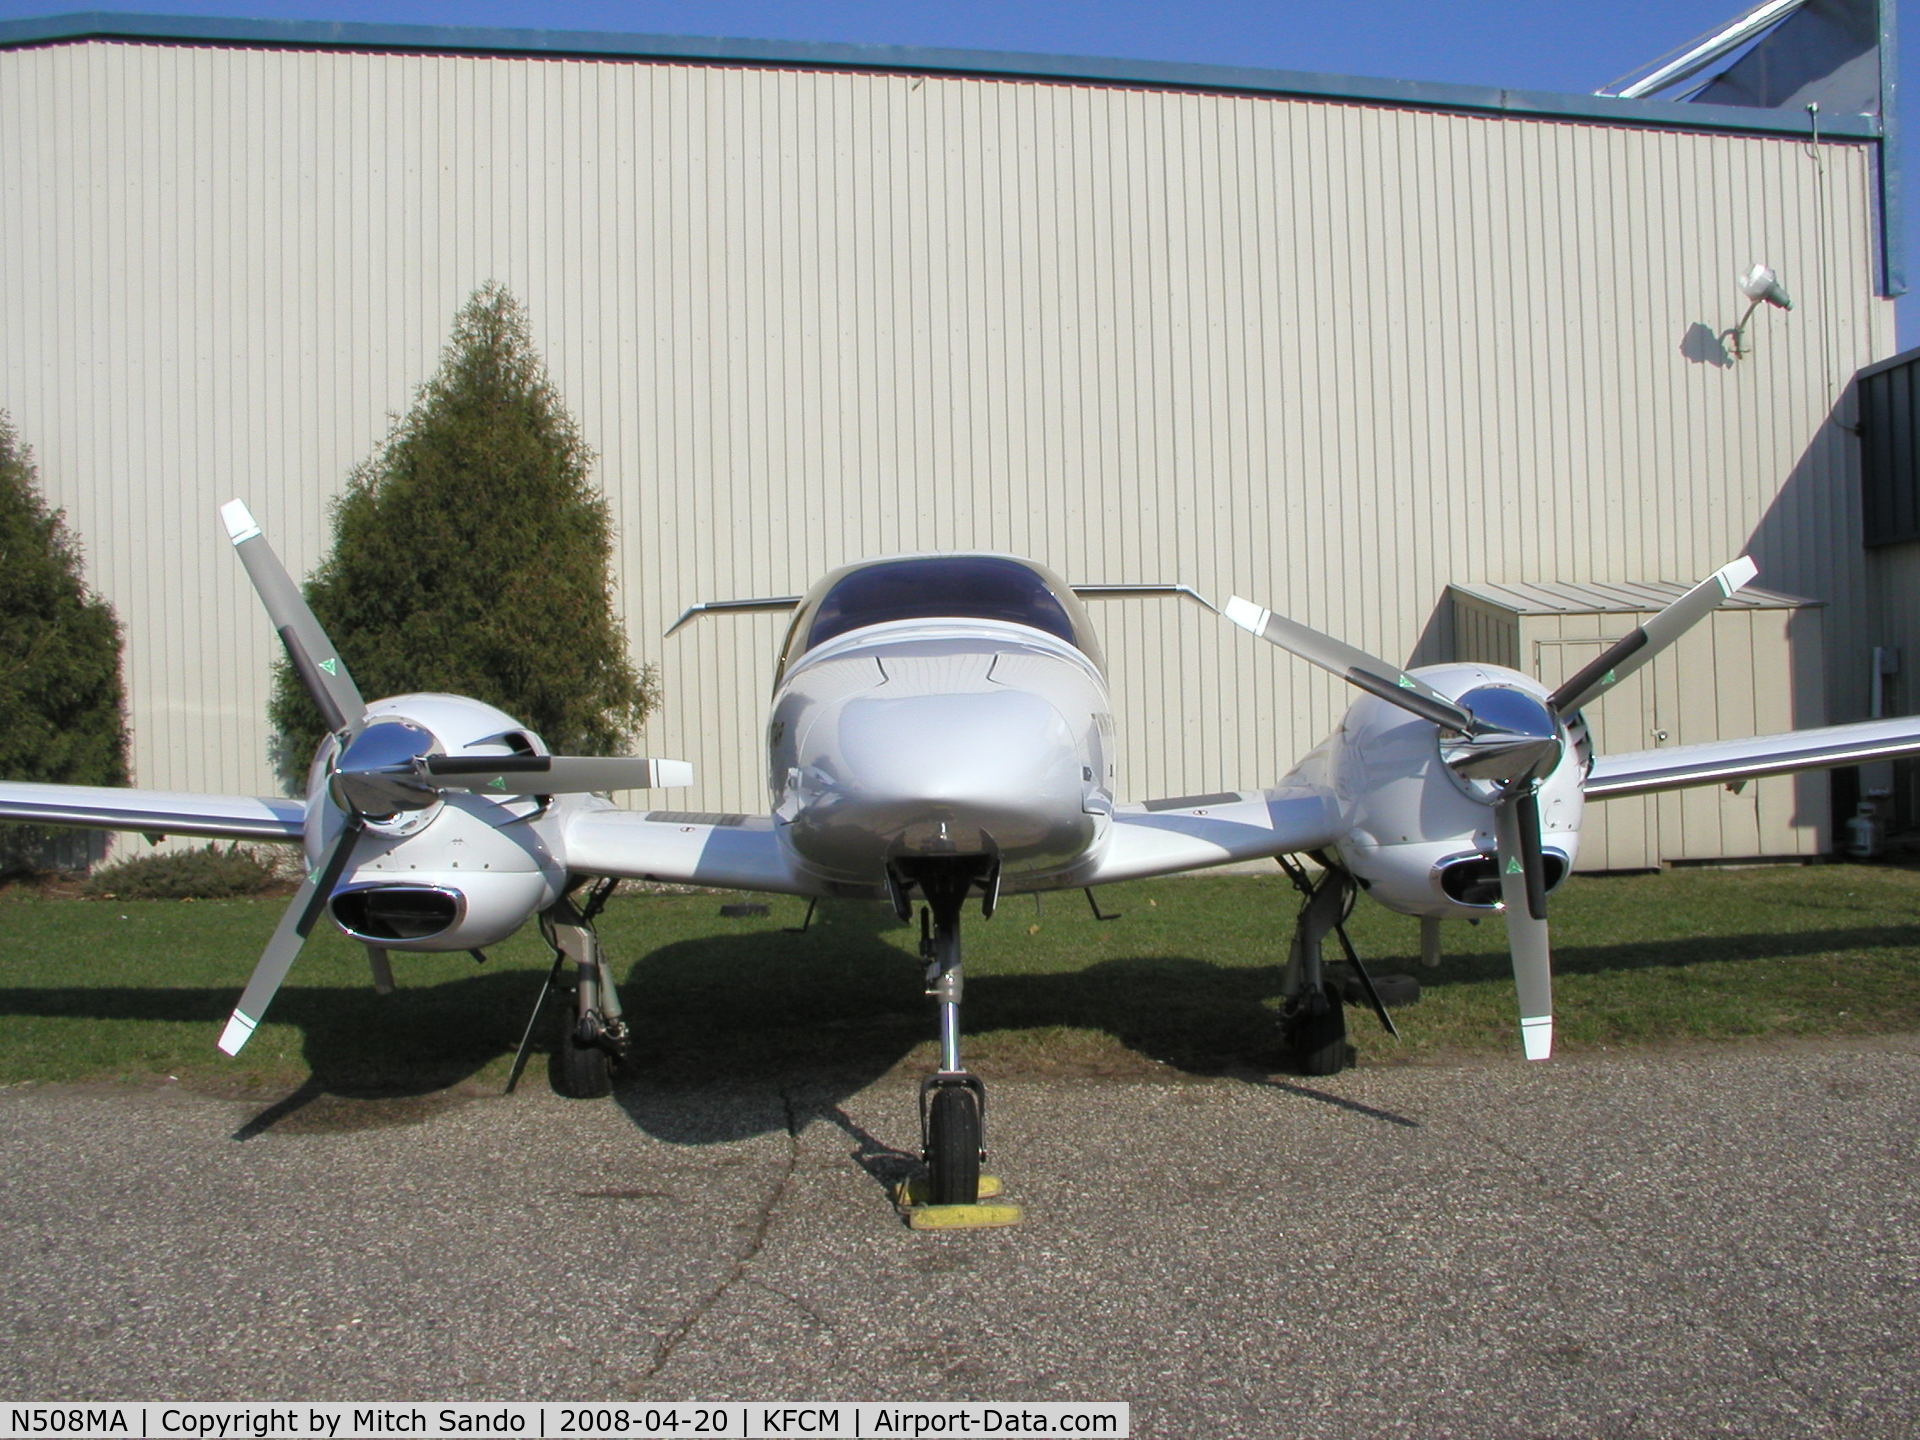 N508MA, 2008 Diamond DA-42 Twin Star C/N 42.AC117, Parked on the ramp at Modern Aero.